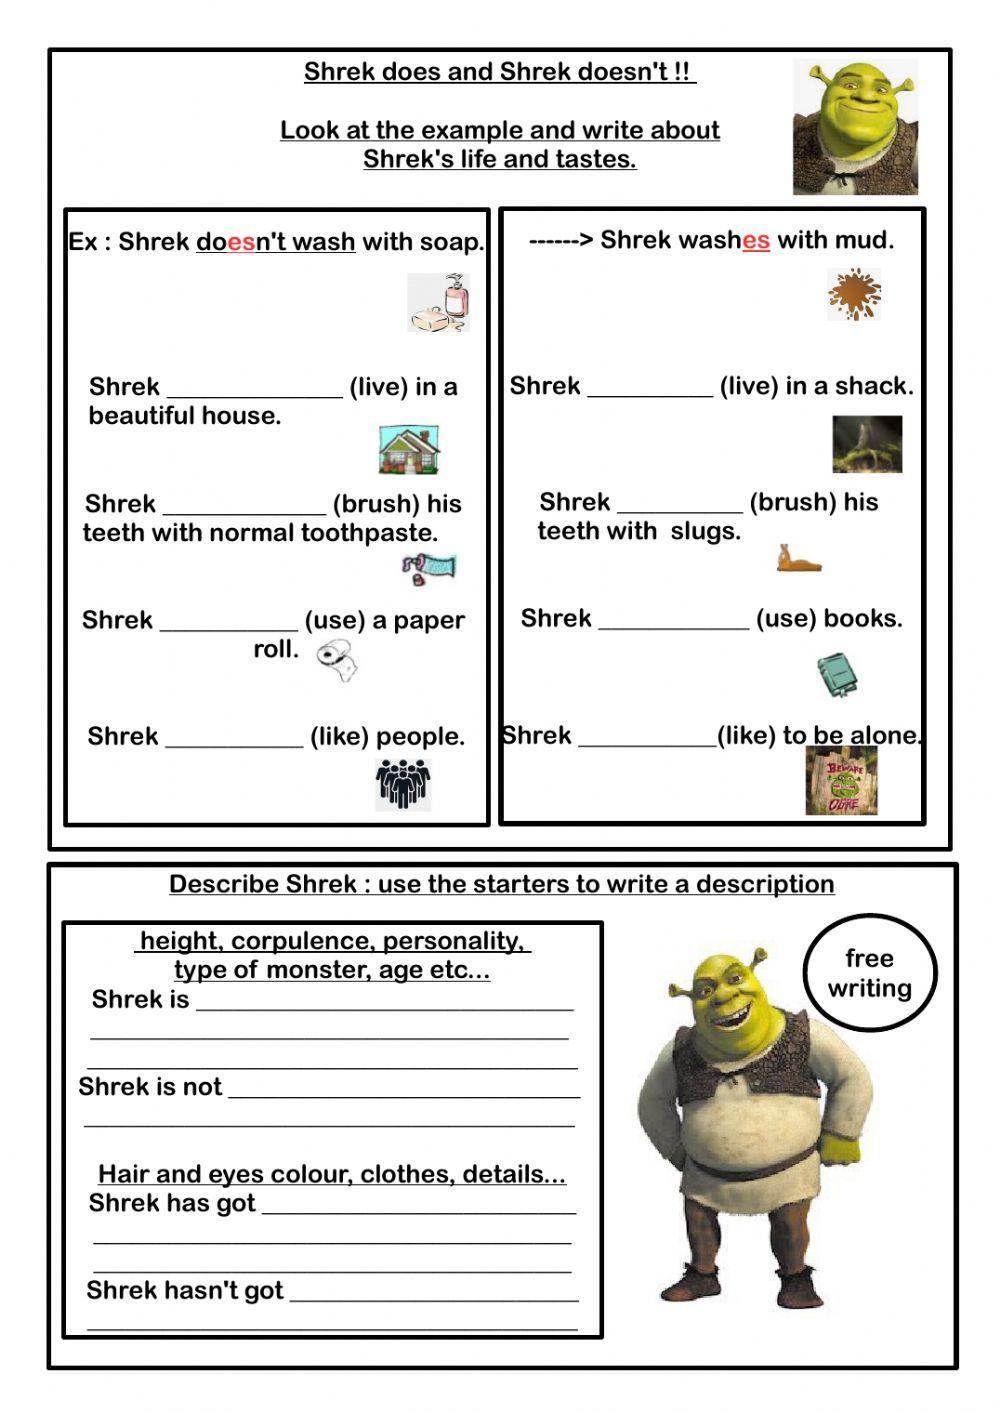 Shrek's routine